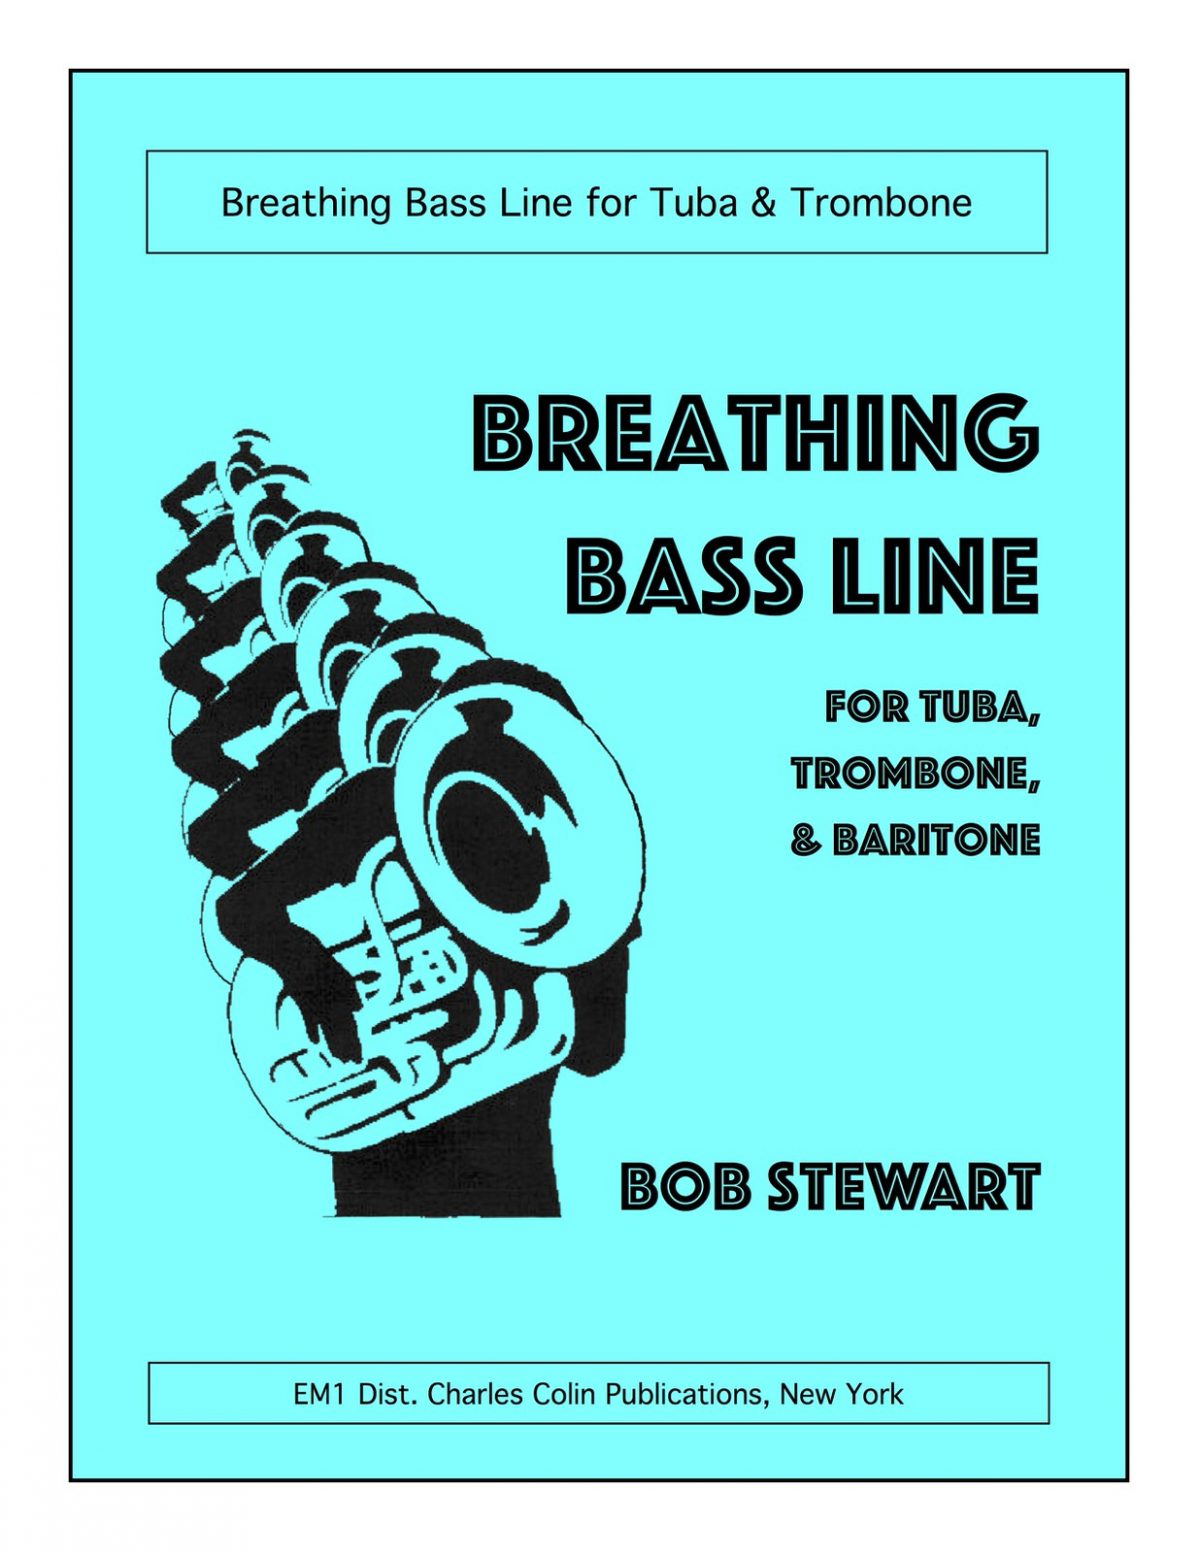 Stewart, Bob, The Breathing Bass Line-p01